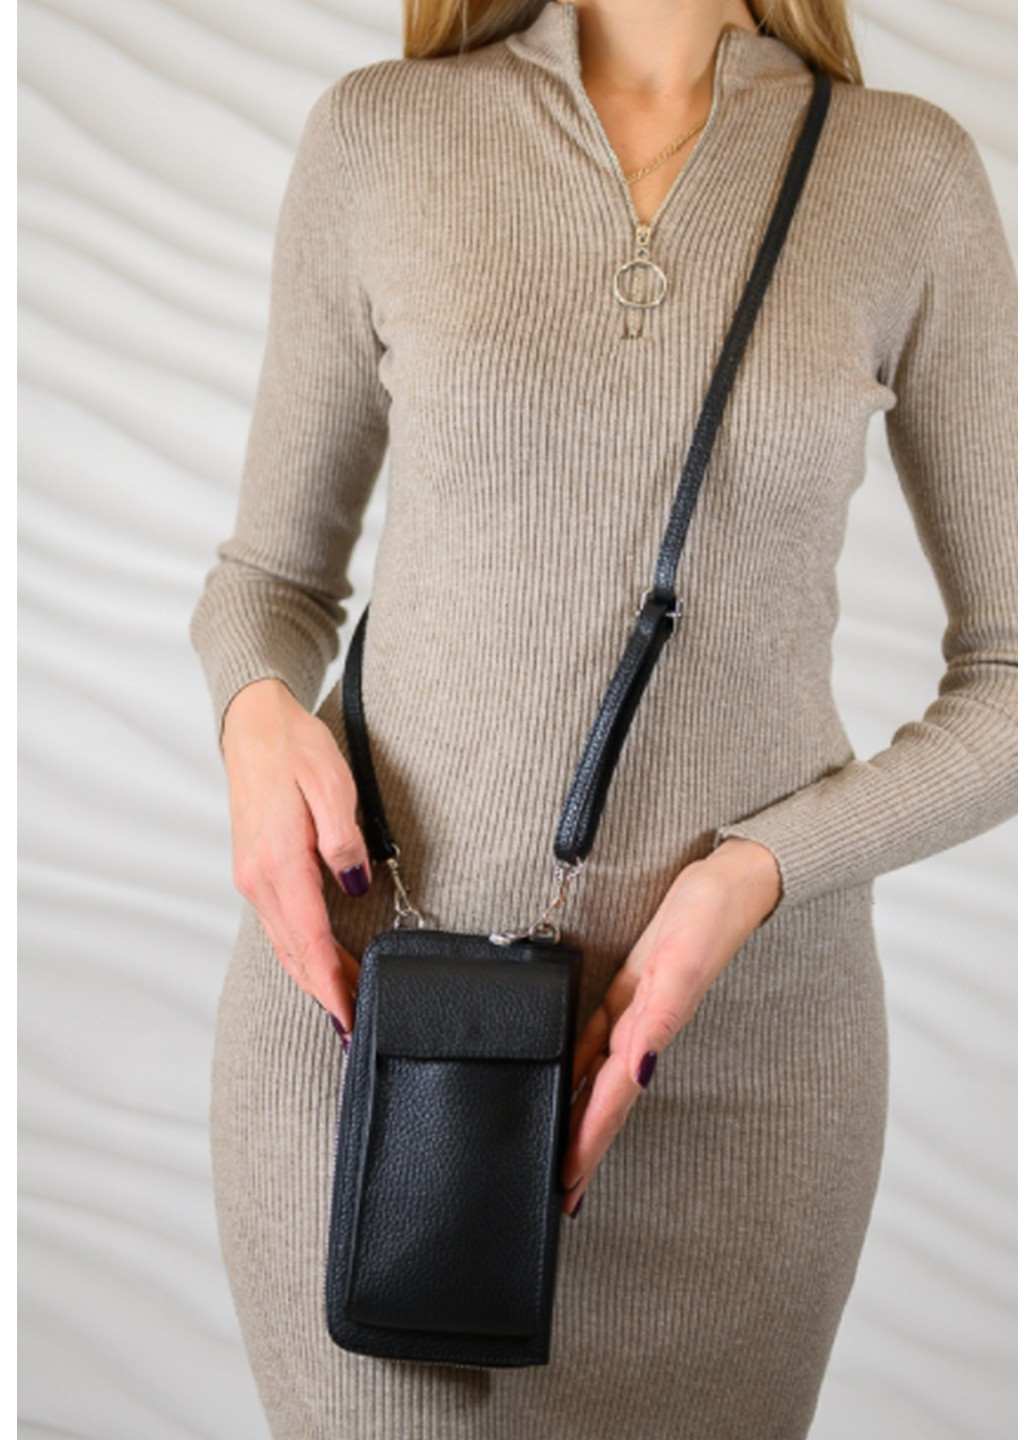 Женская кожаная сумка-кошелек через плечо 19,5х10,5х5 см LeathART (259091990)